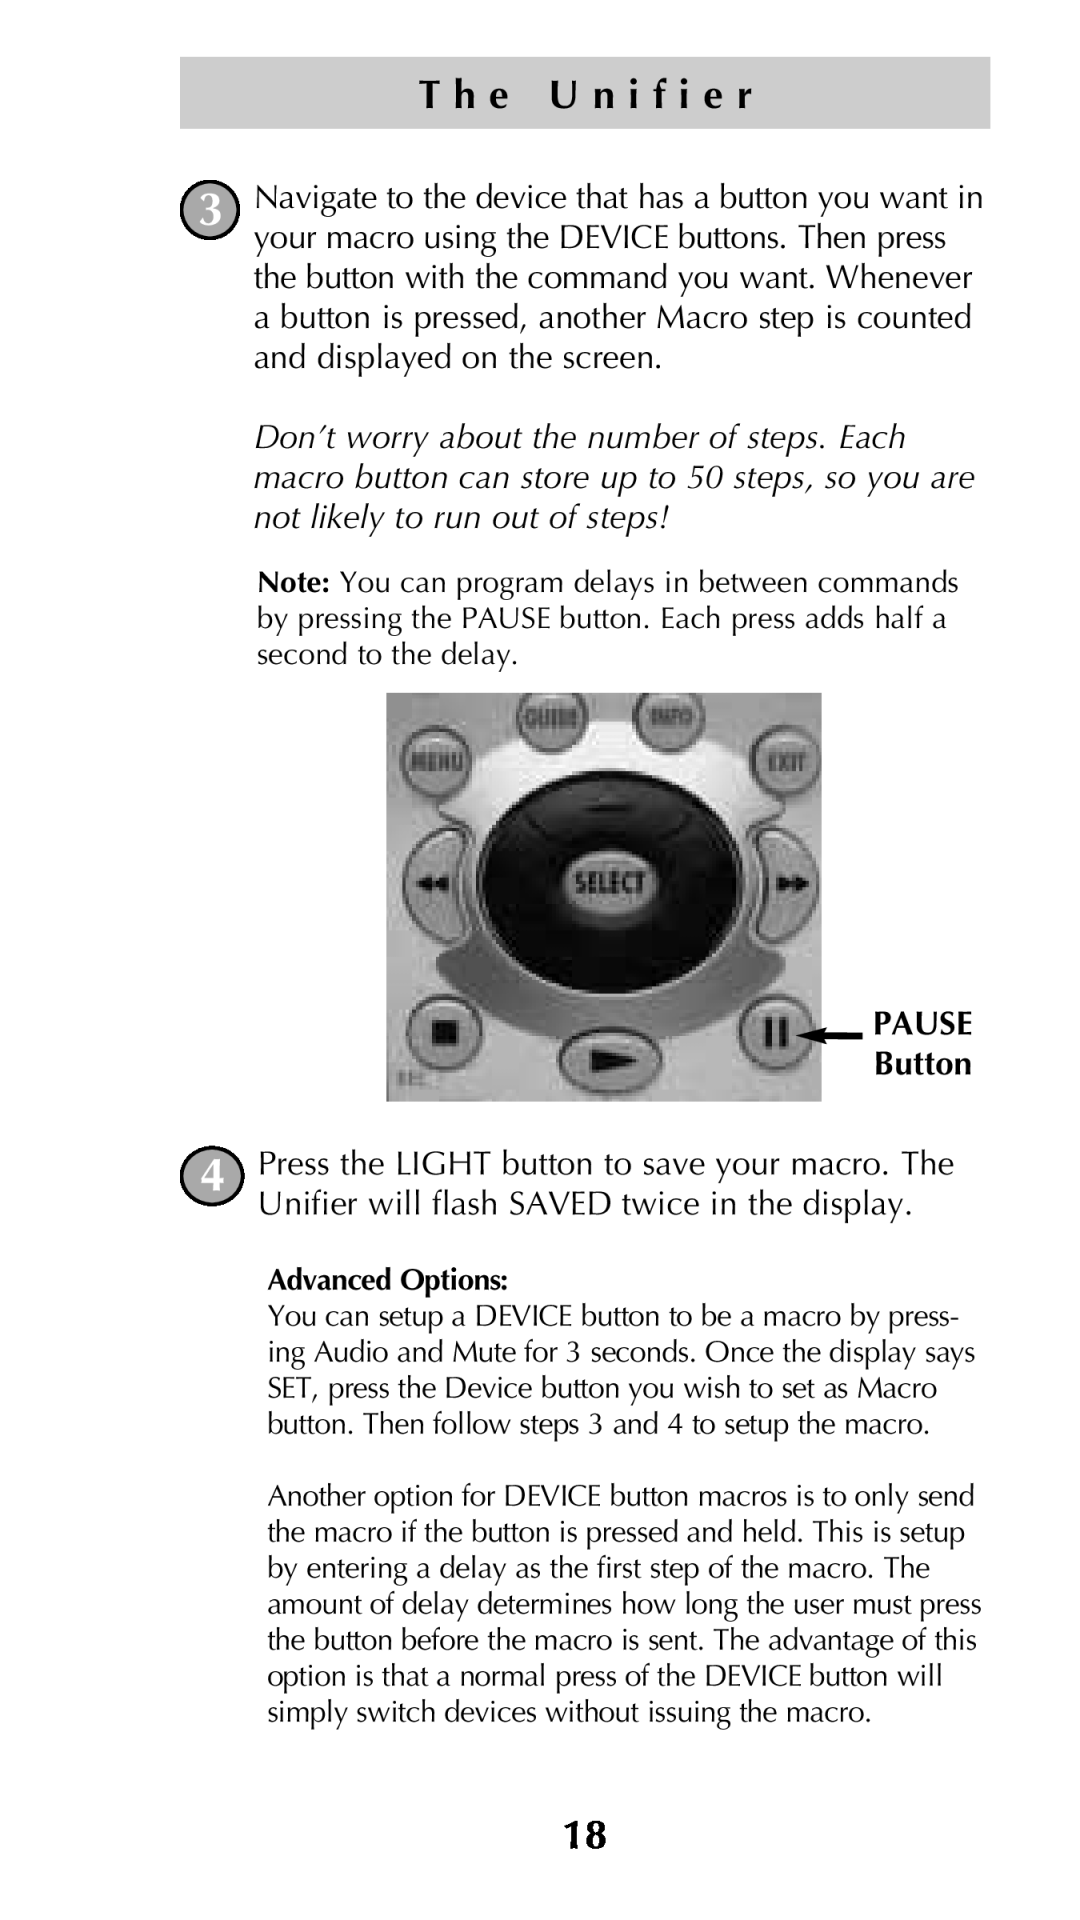 Universal Remote Control Unifier URC-100 owner manual T h e U n i f i e r, PAUSE Button 